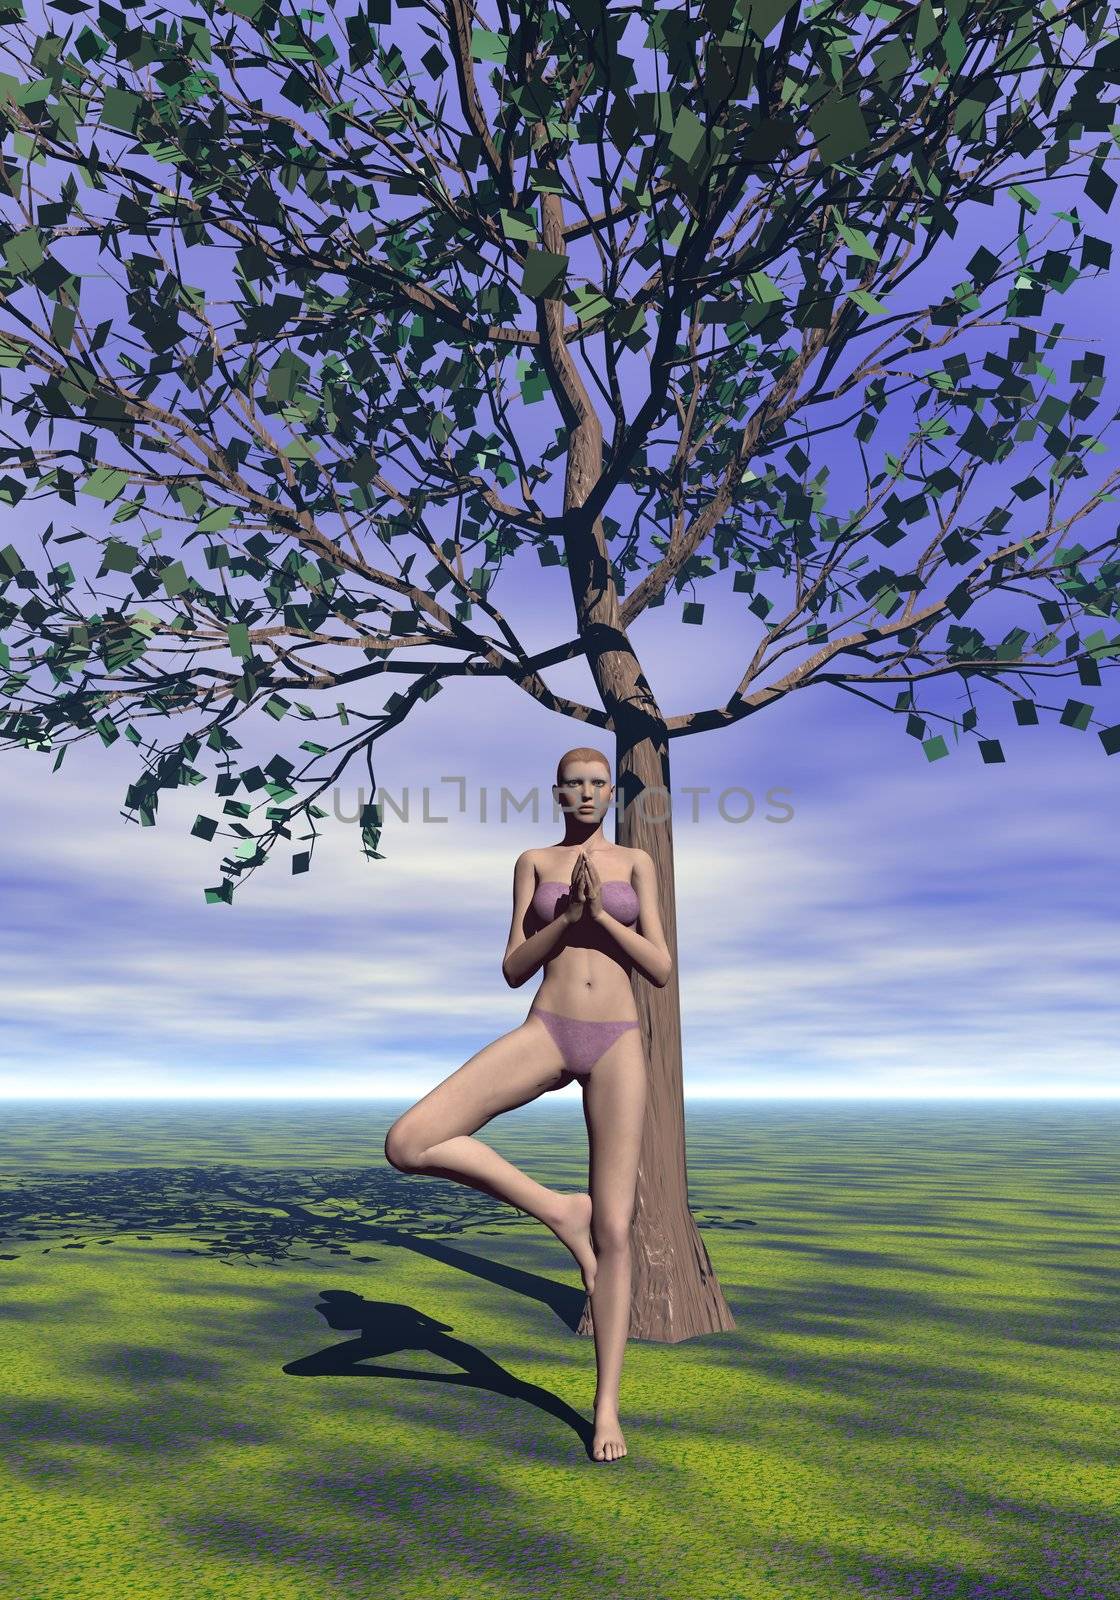 Tree pose, vrkasana - 3D render by Elenaphotos21